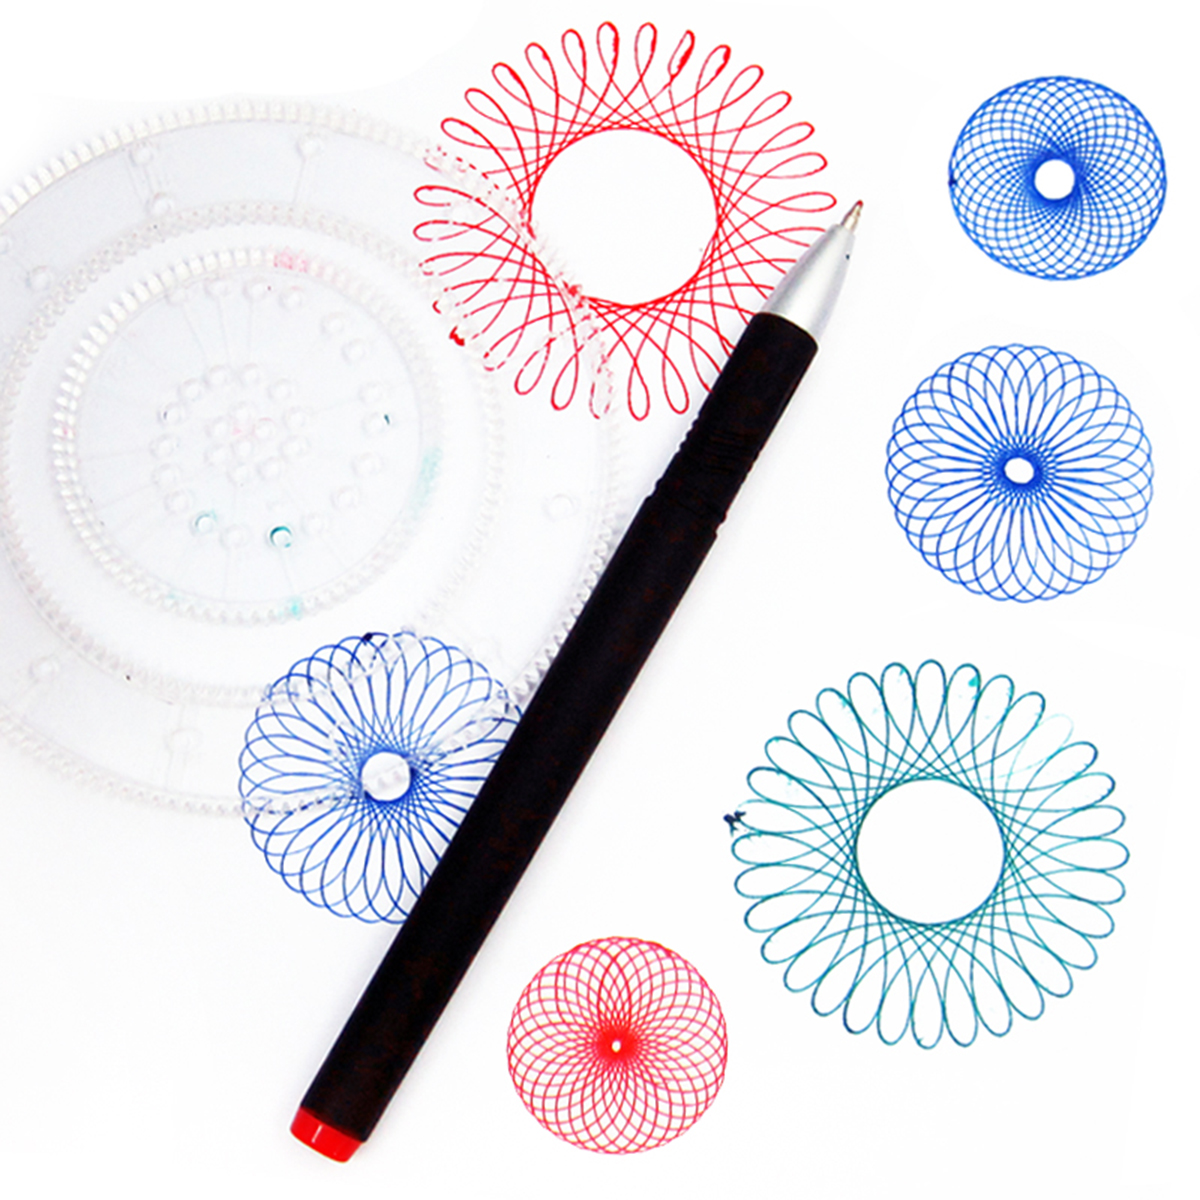 Original Spirograph Design Set Geometric Drawing Ruler Kids Spiral Art Craft Creation Education Toy 23